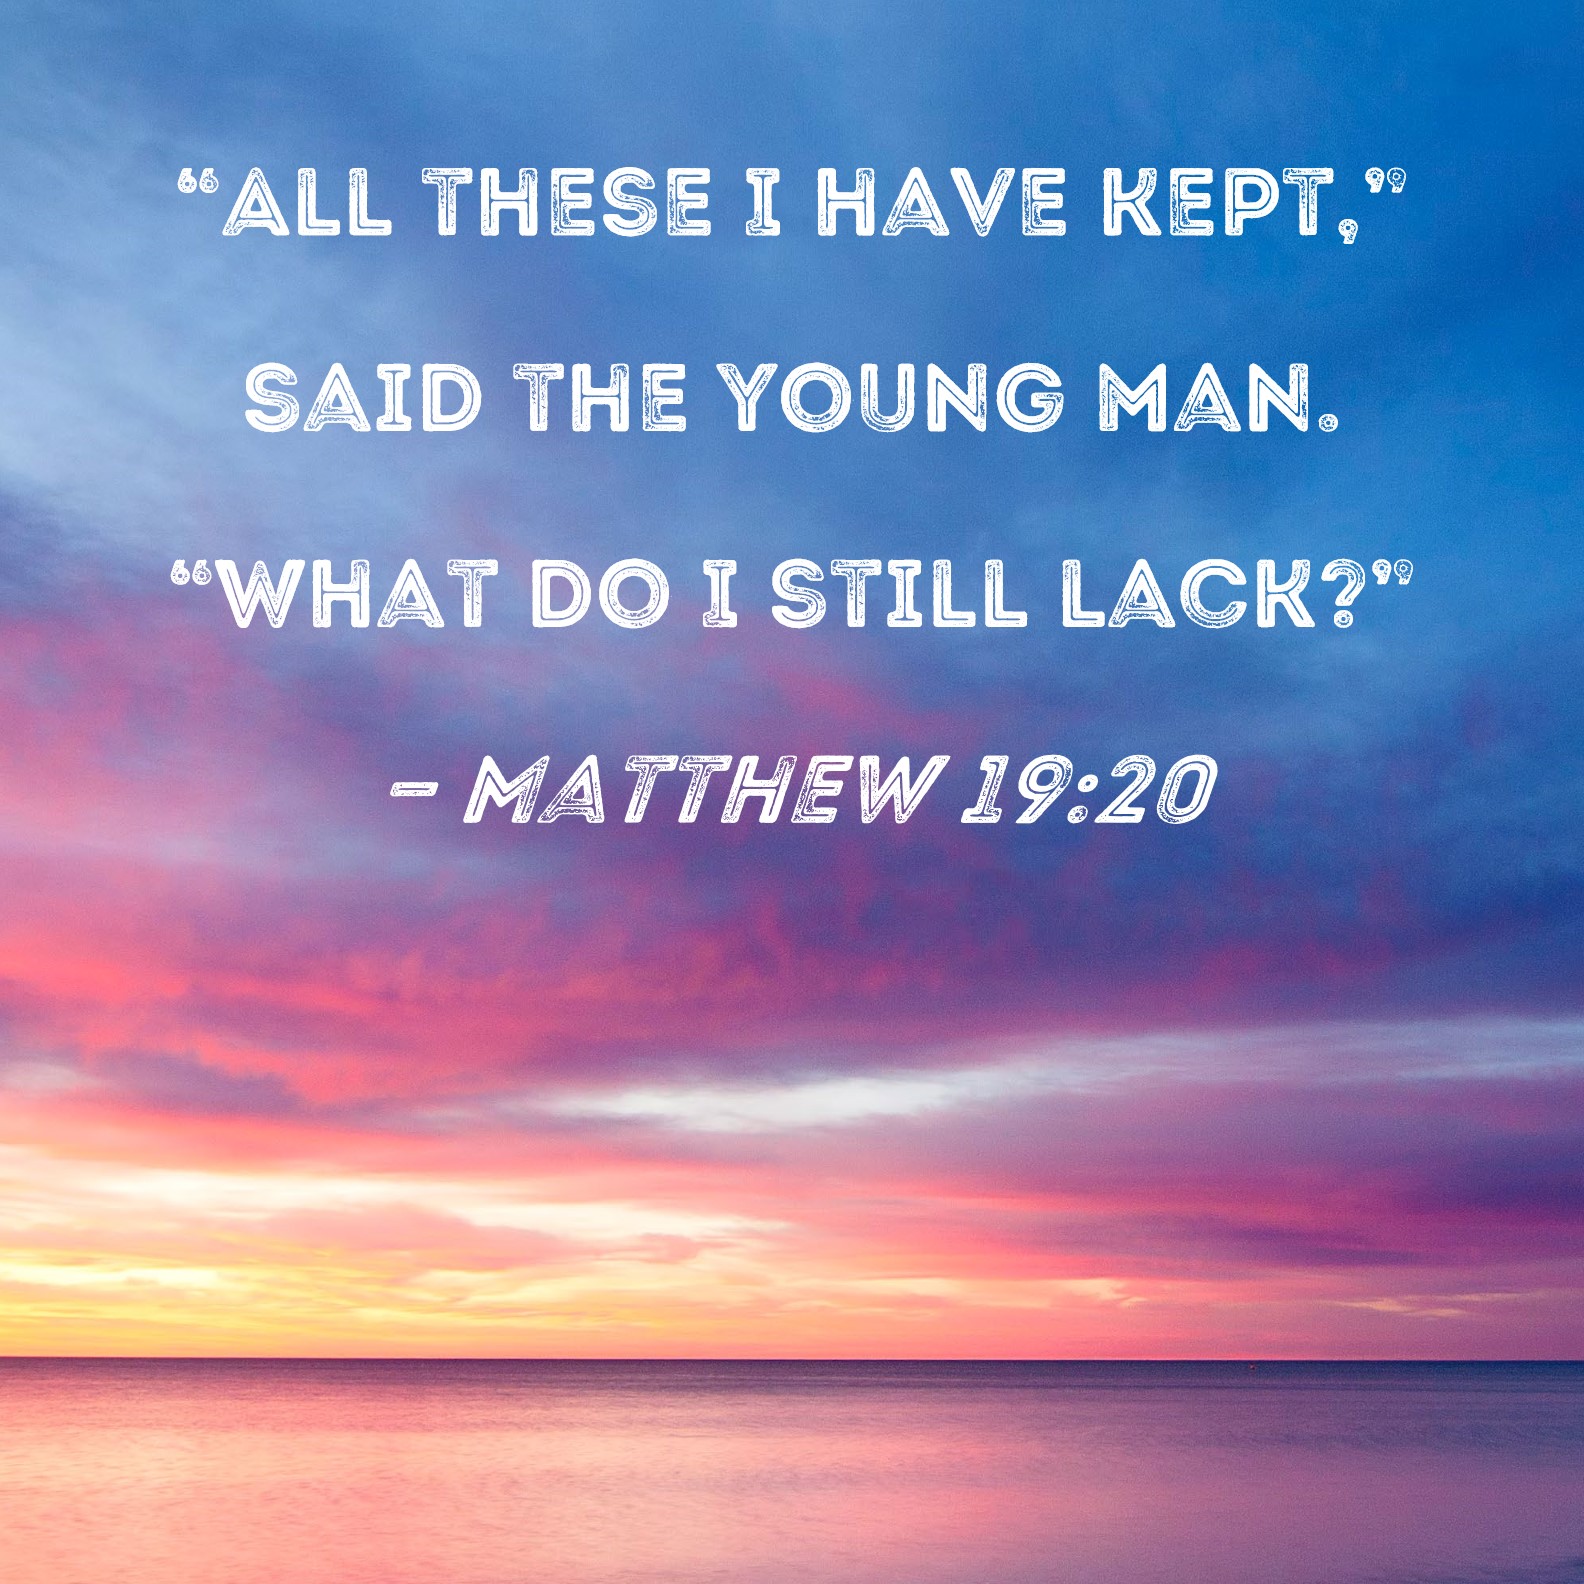 Matthew 19:20 